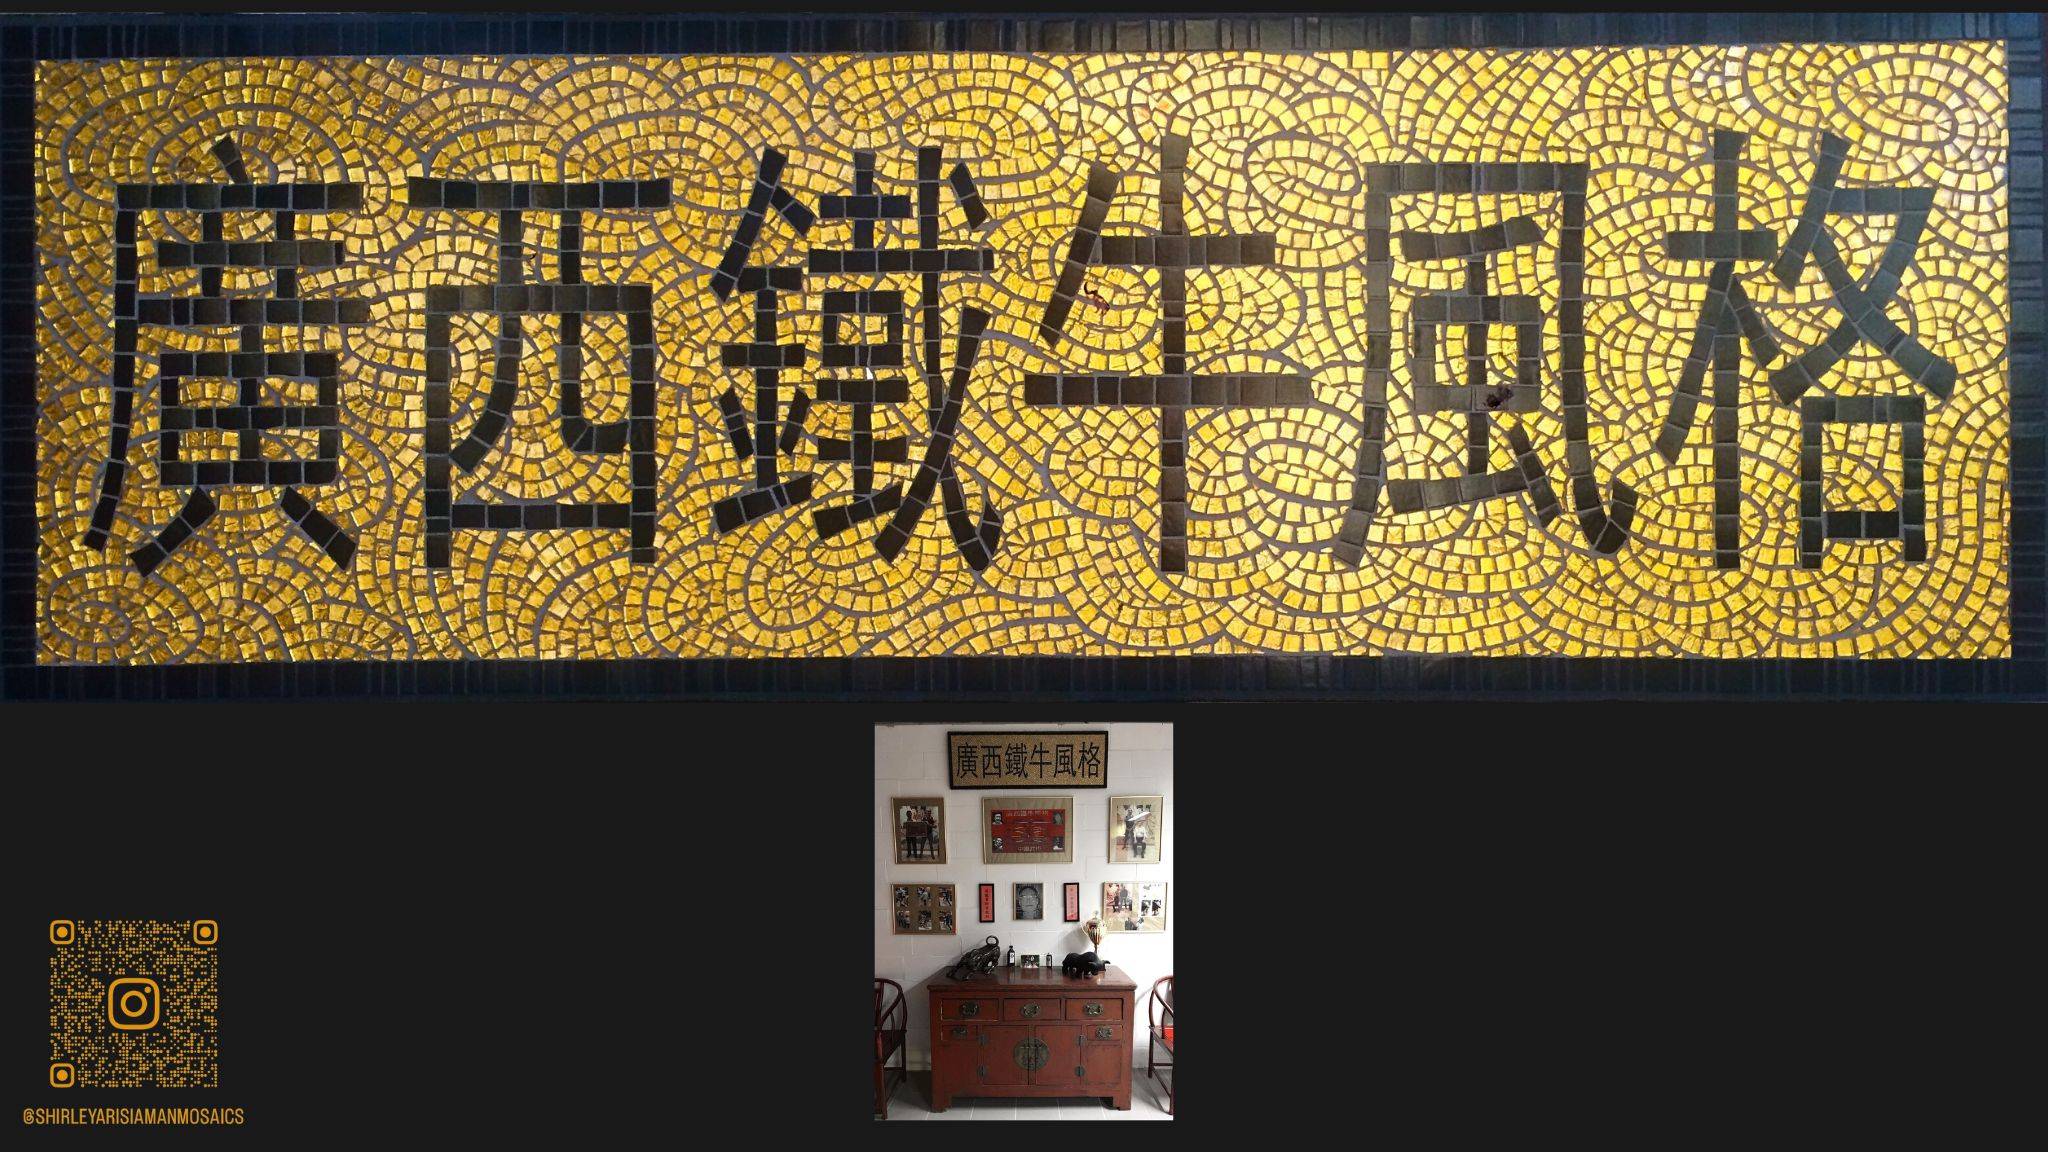 Kong Sai Tit Ngau Fong Ka kung fu Belgium in mozaiek met chinese tekens en gouden wolken patroon op de achtergrond